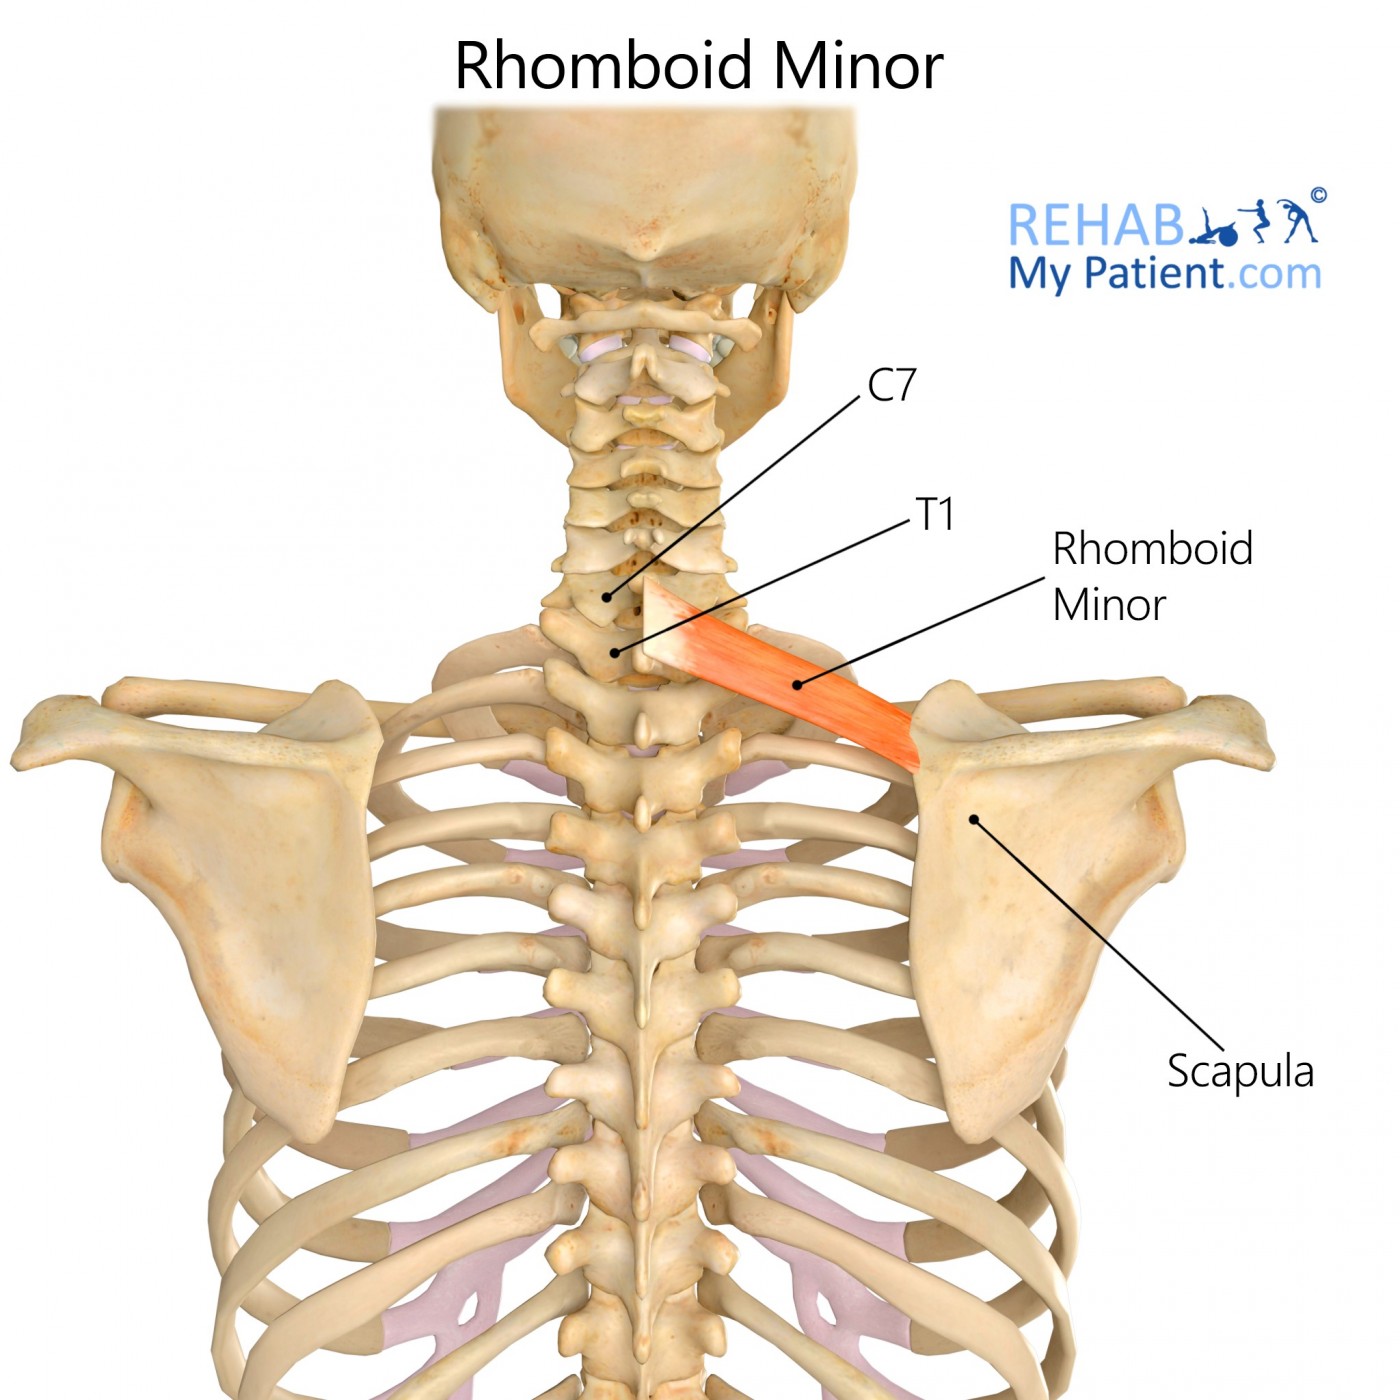 Rhomboid minor